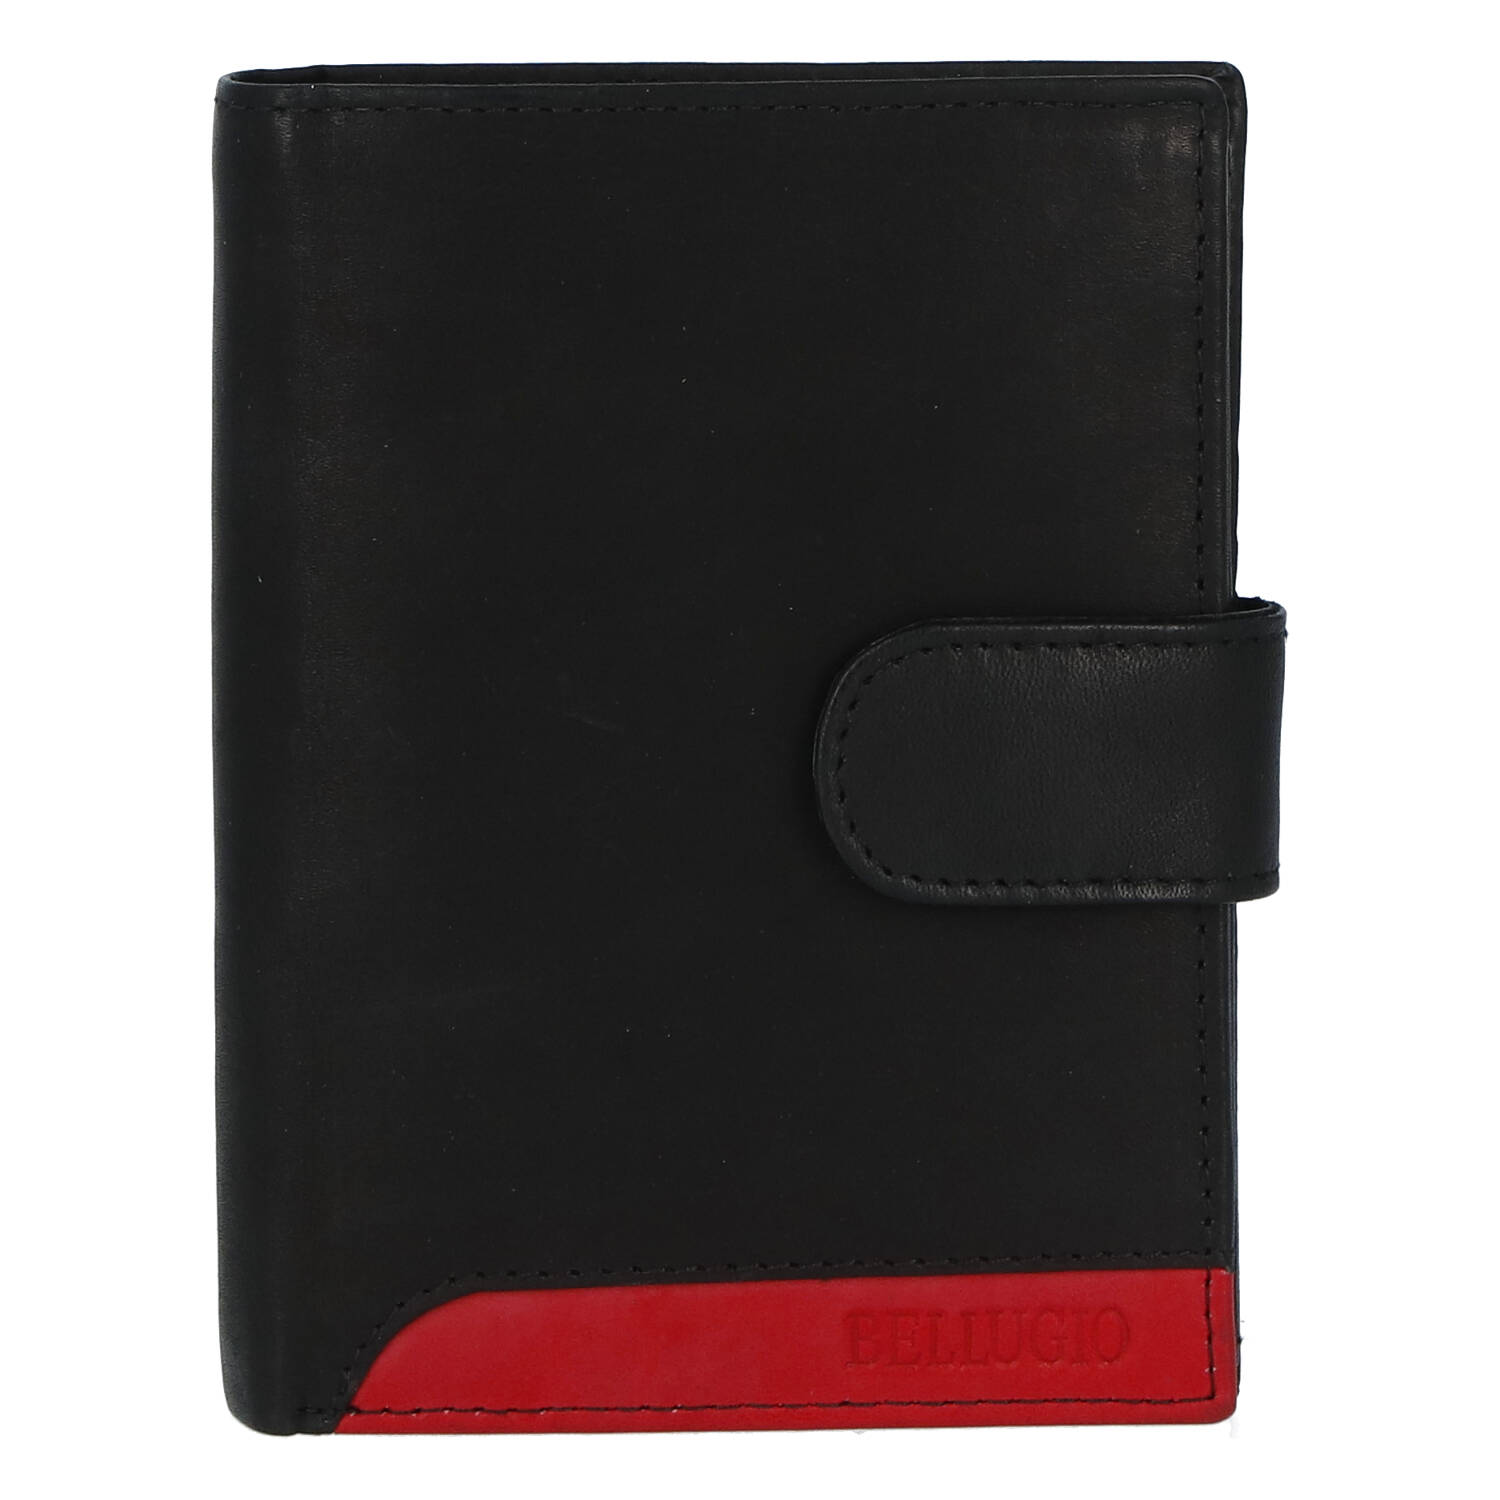 Praktická pánská kožená peněženka s barevným logem Margita, černá/červená